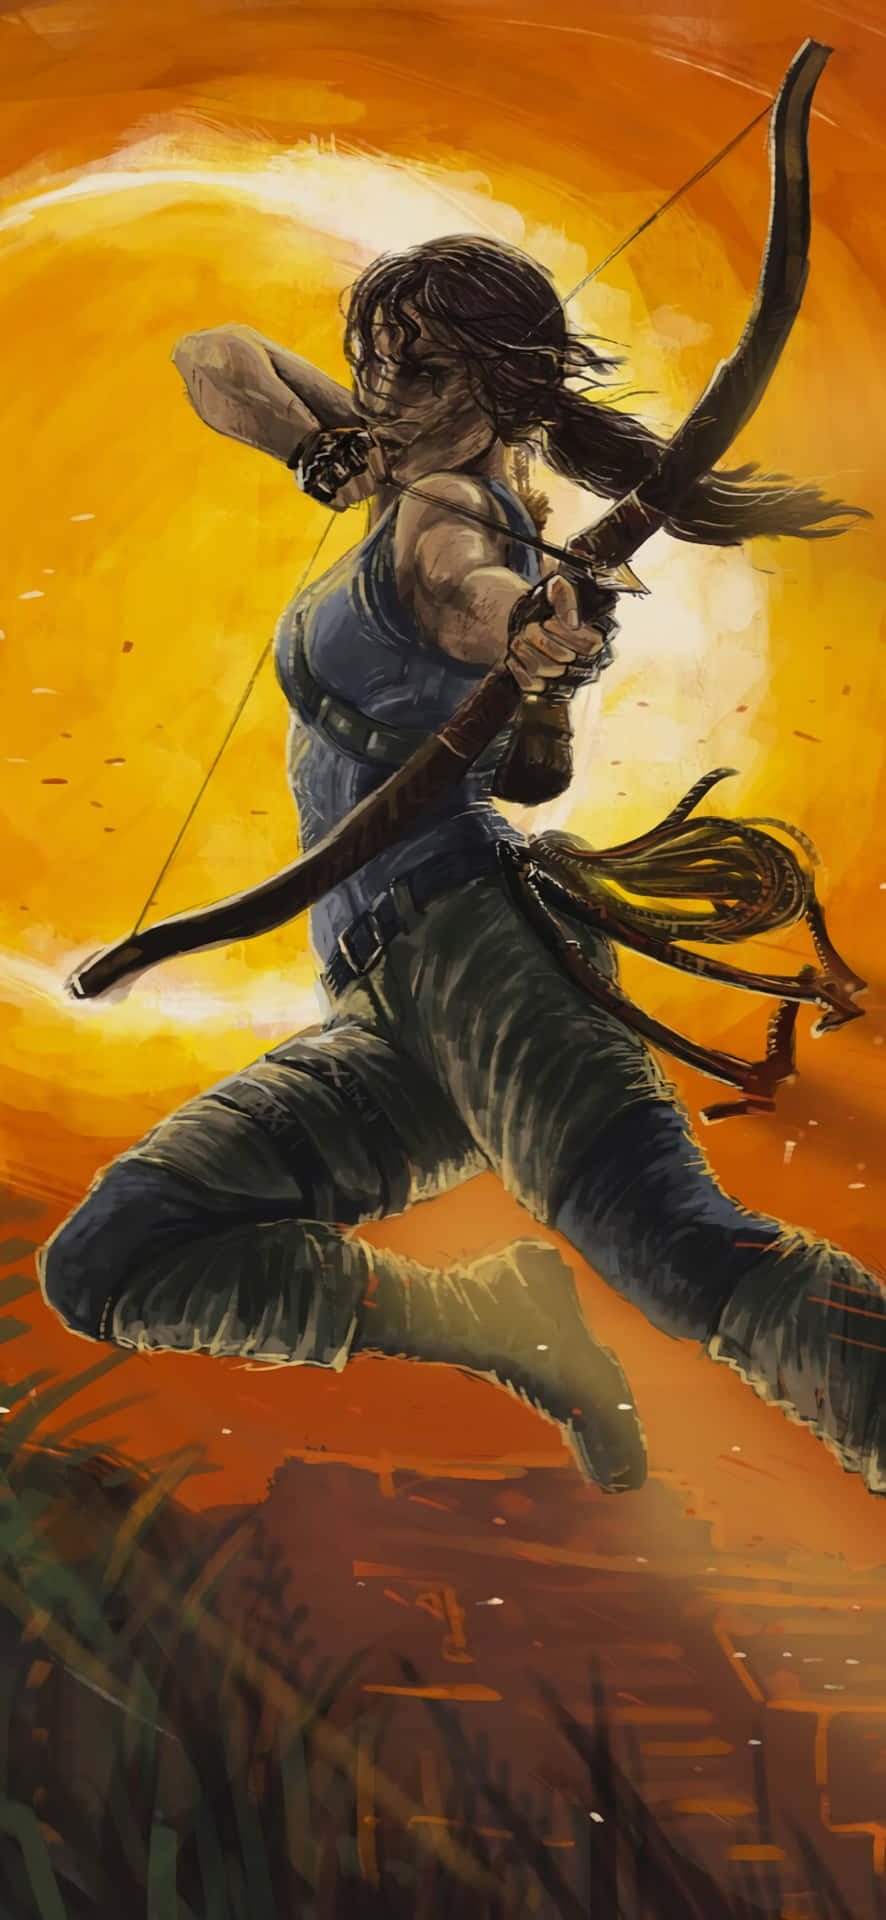 Fondode Pantalla De Android Rise Of The Tomb Raider Con El Arco